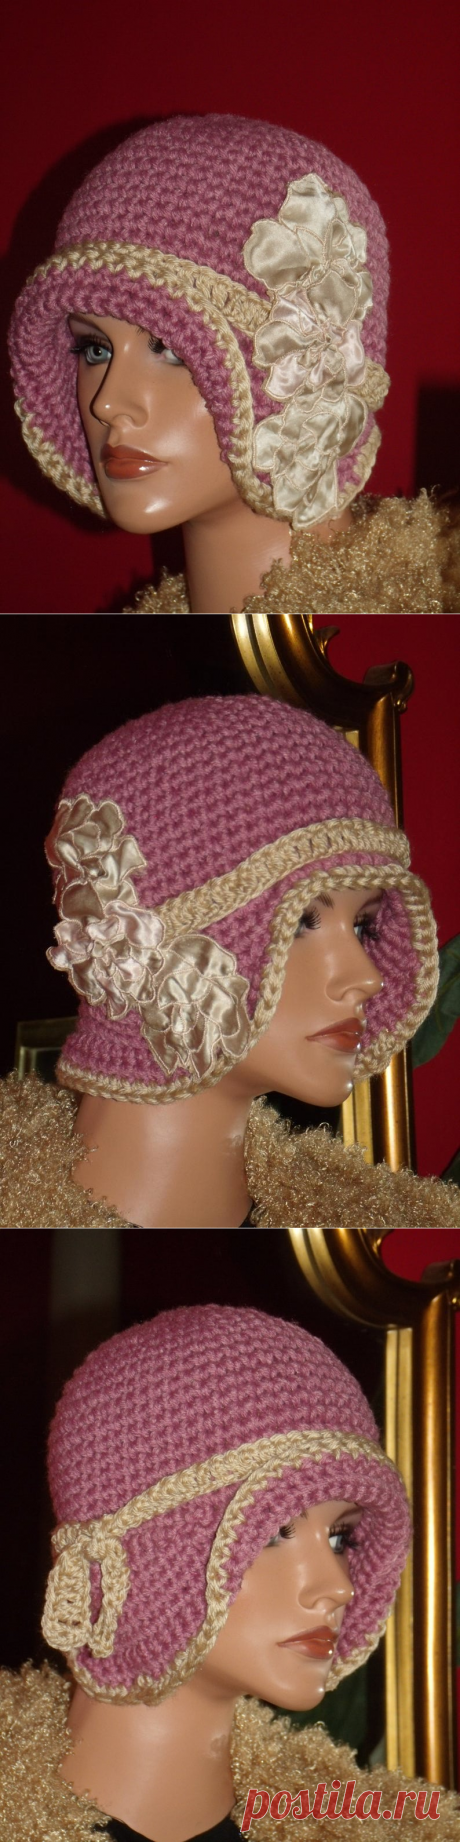 Rosa häkeln Flapper Hut antiken Stil personalisierte | Etsy